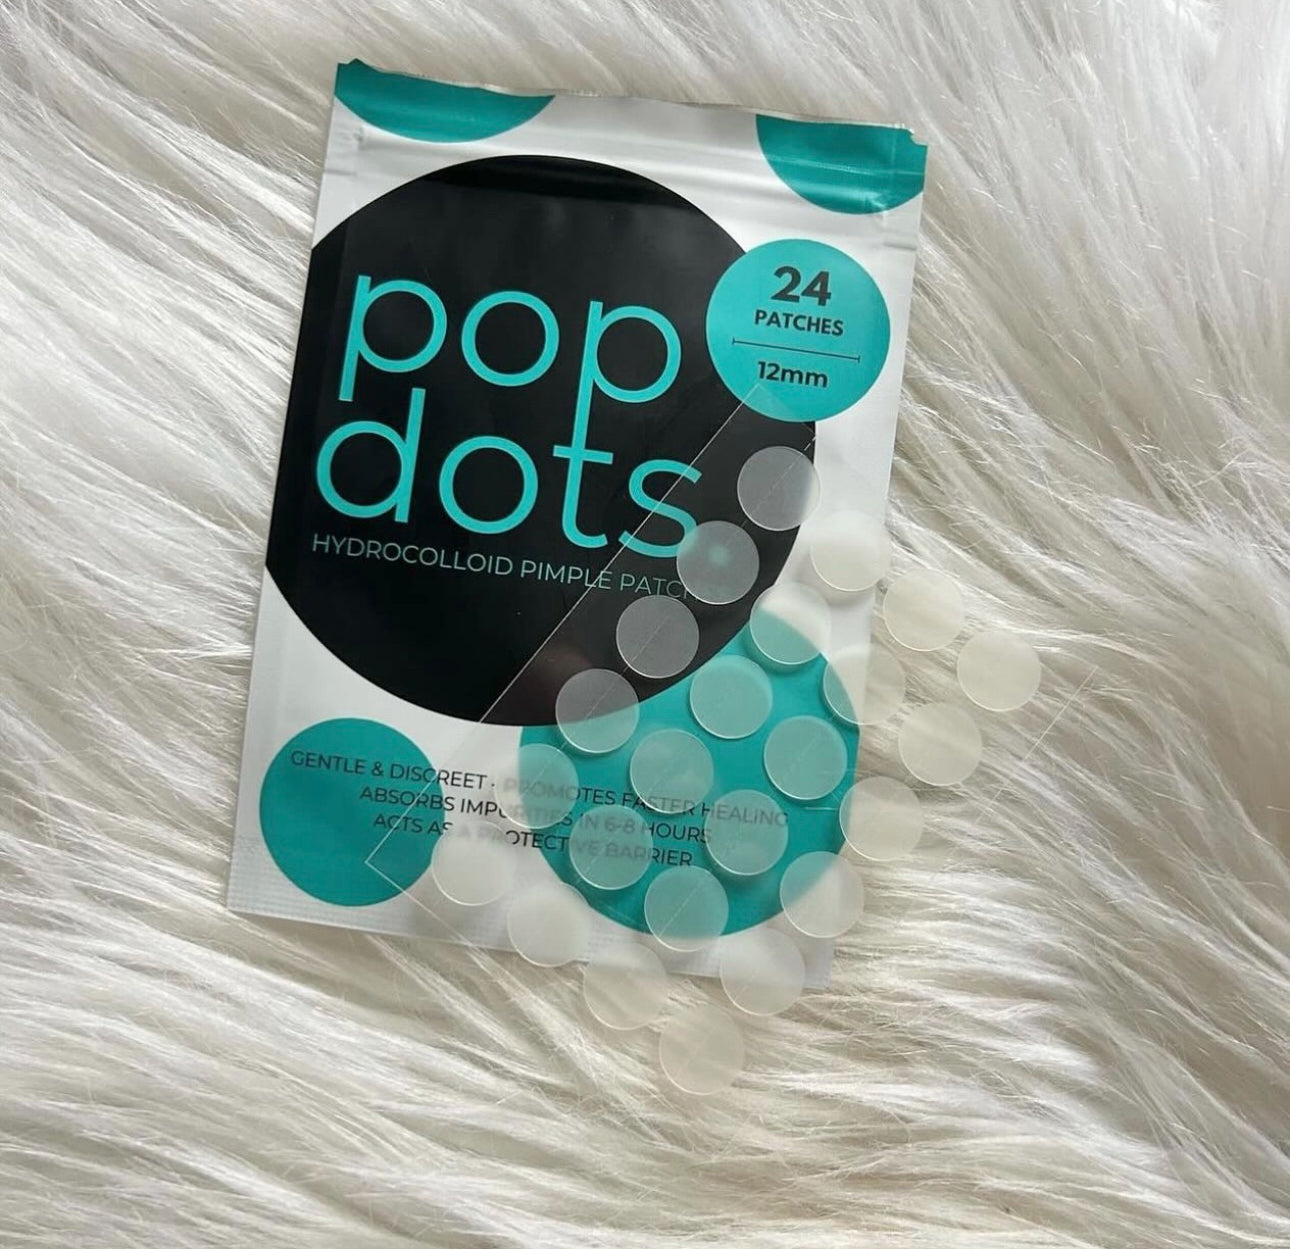 Pop Dots Pimple Patches open pack showing contents